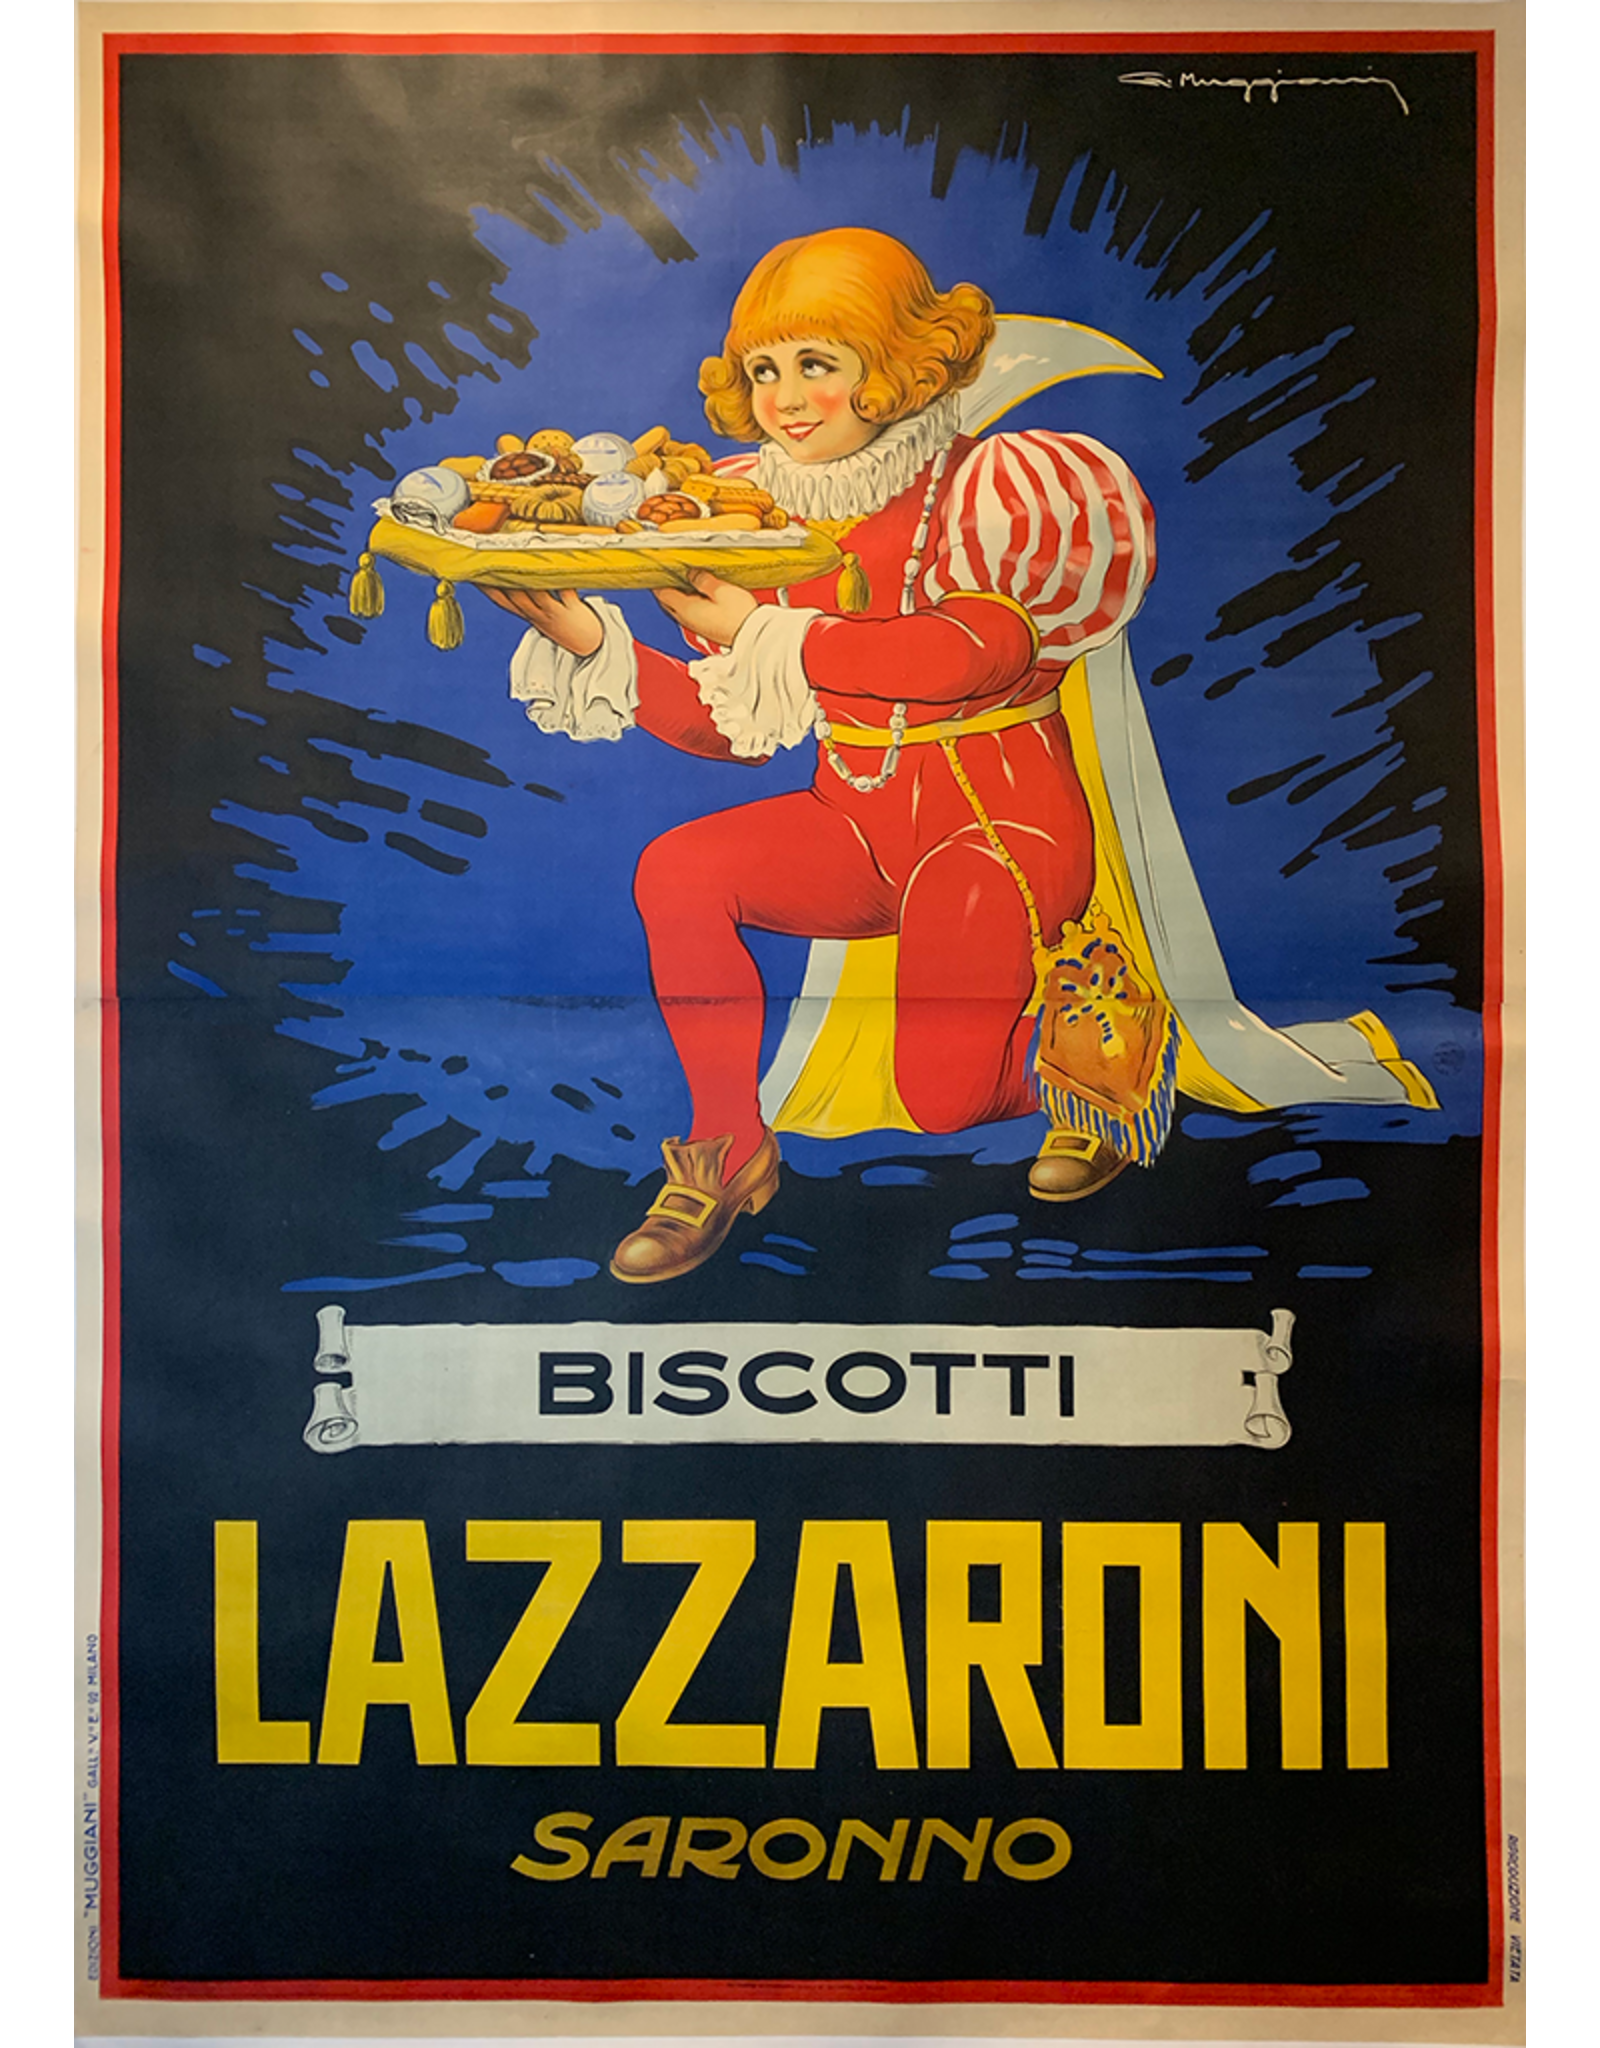 SPV Lazzaroni Biscotti Saronno